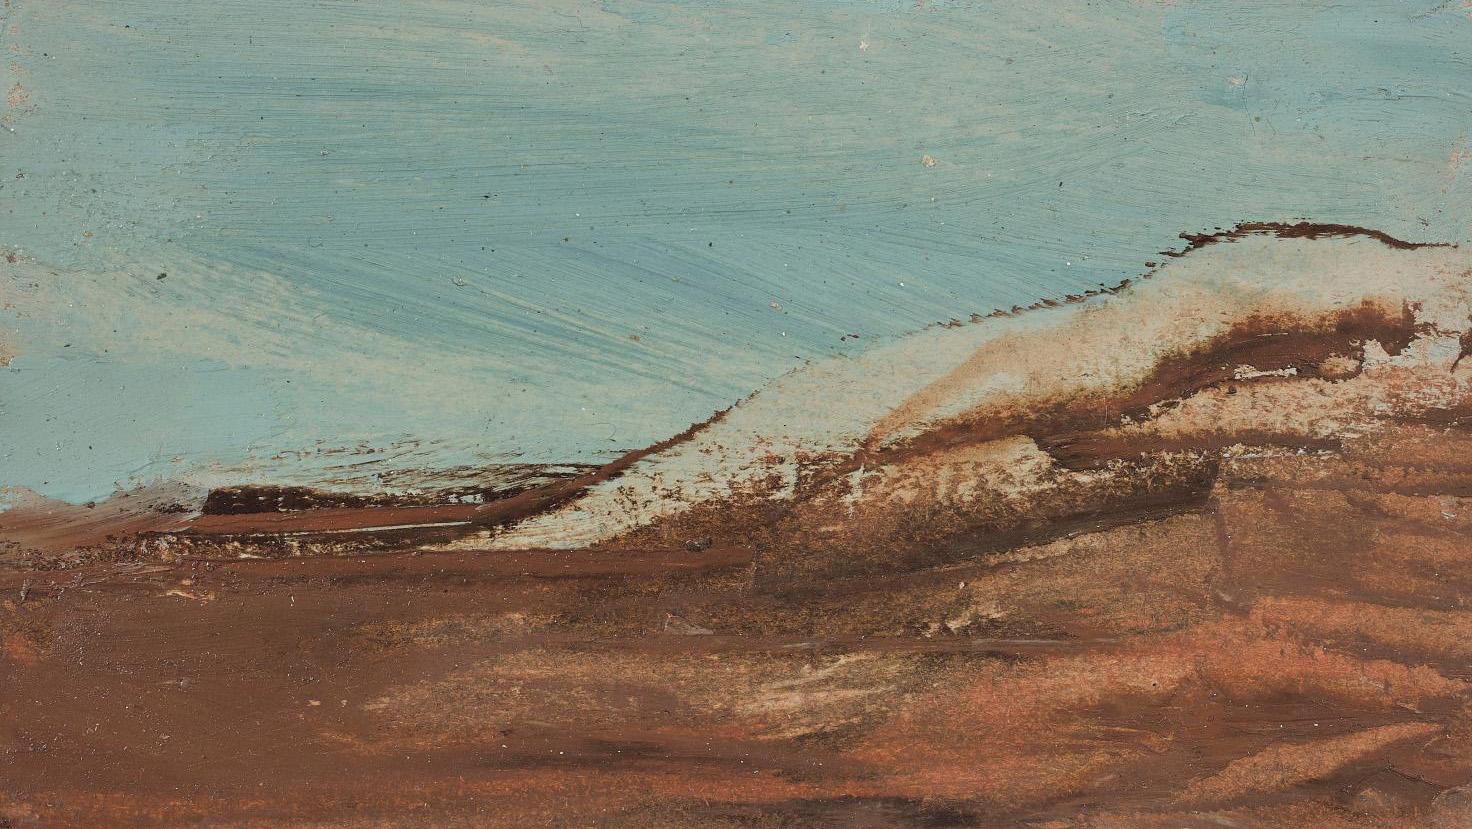 Dora Maar (1907-1997), Paysage (Landscape), c. 1960, oil on cardboard, 8.5 x 15 cm/3.3... Dora Maar: From Muse to Artist